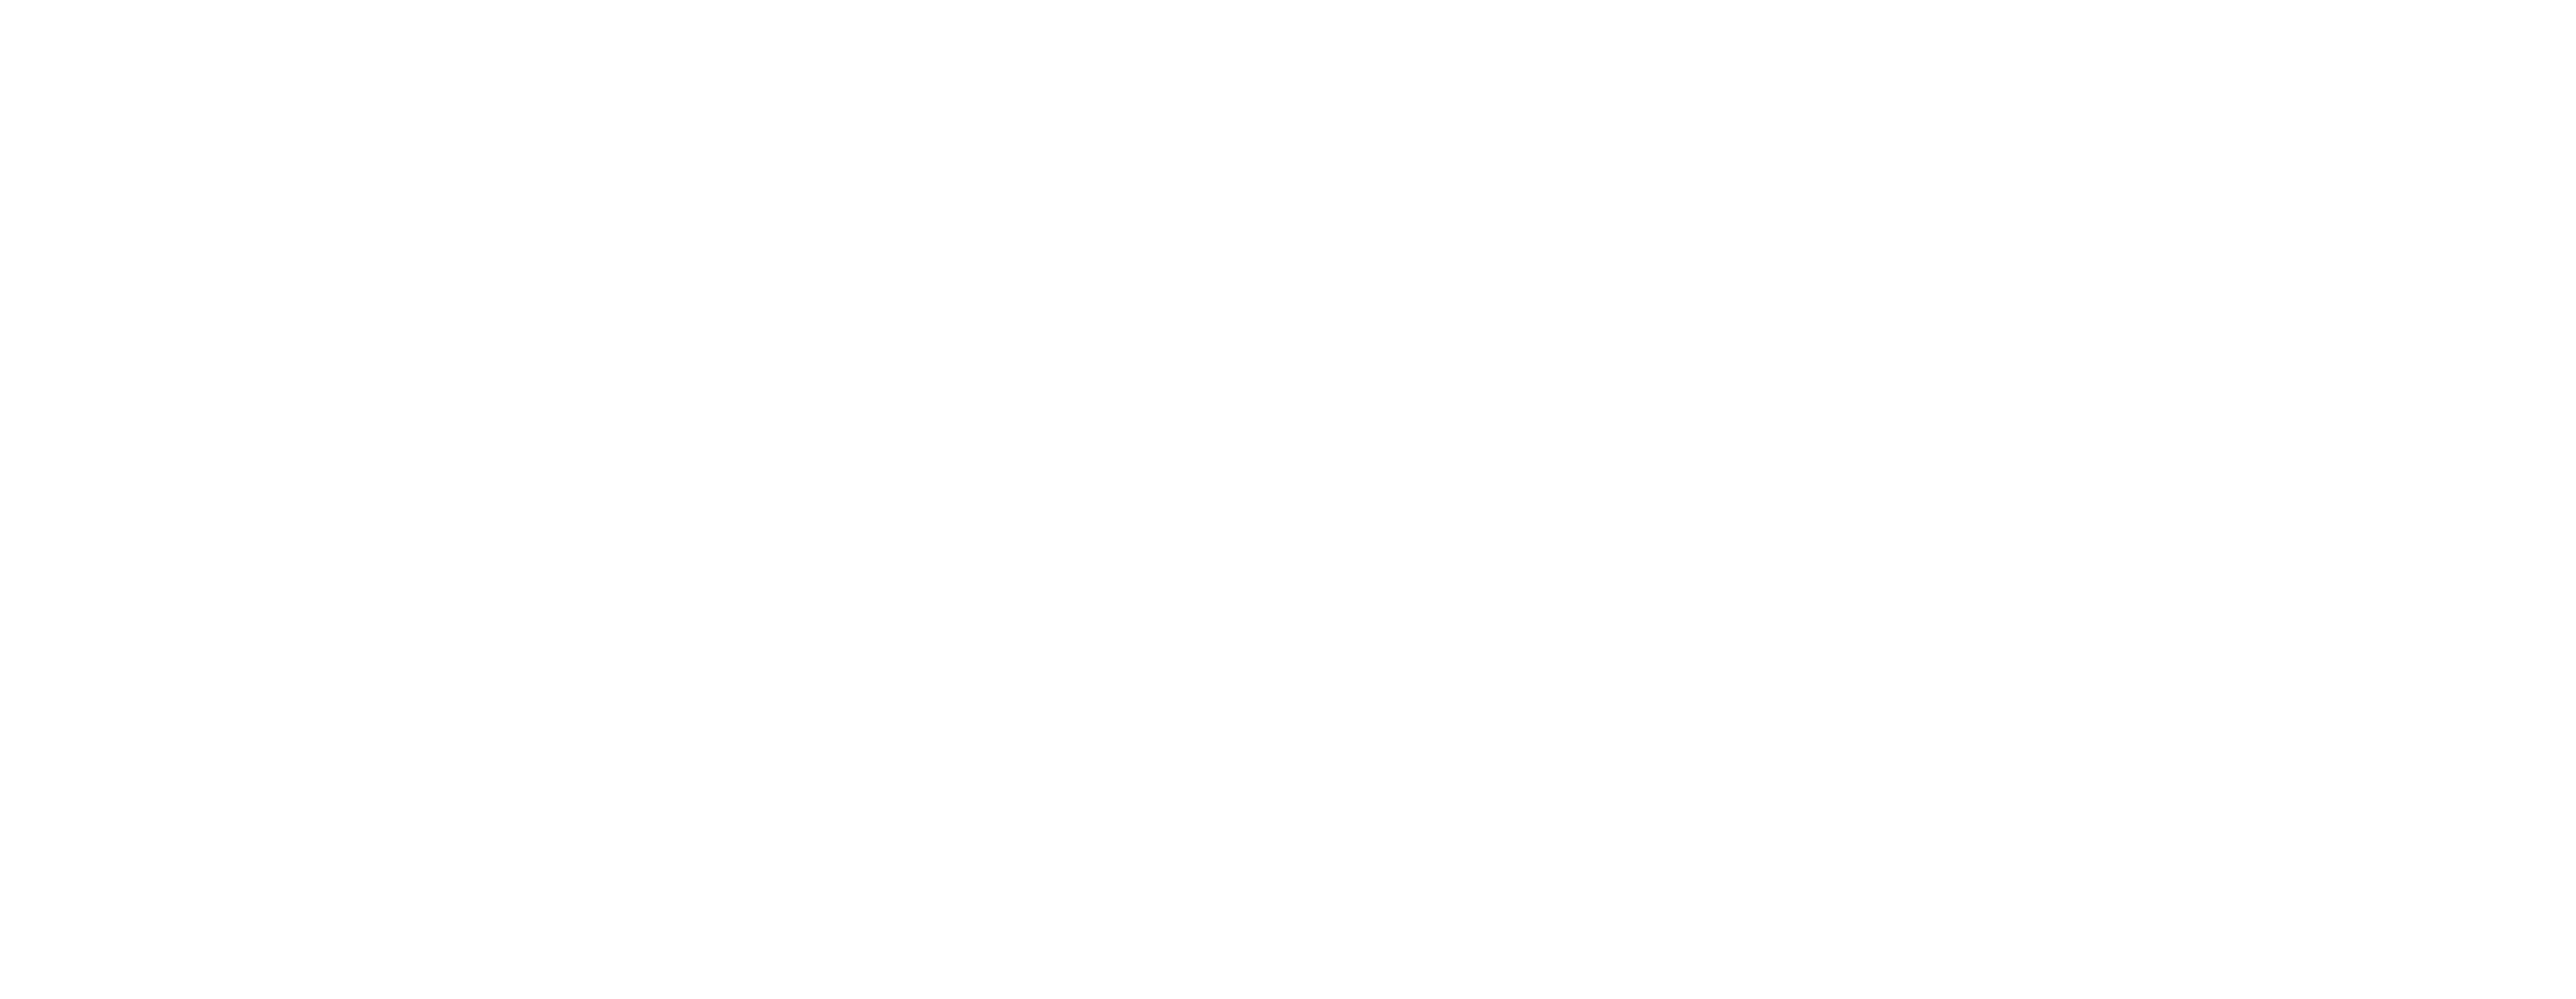 Kato prime